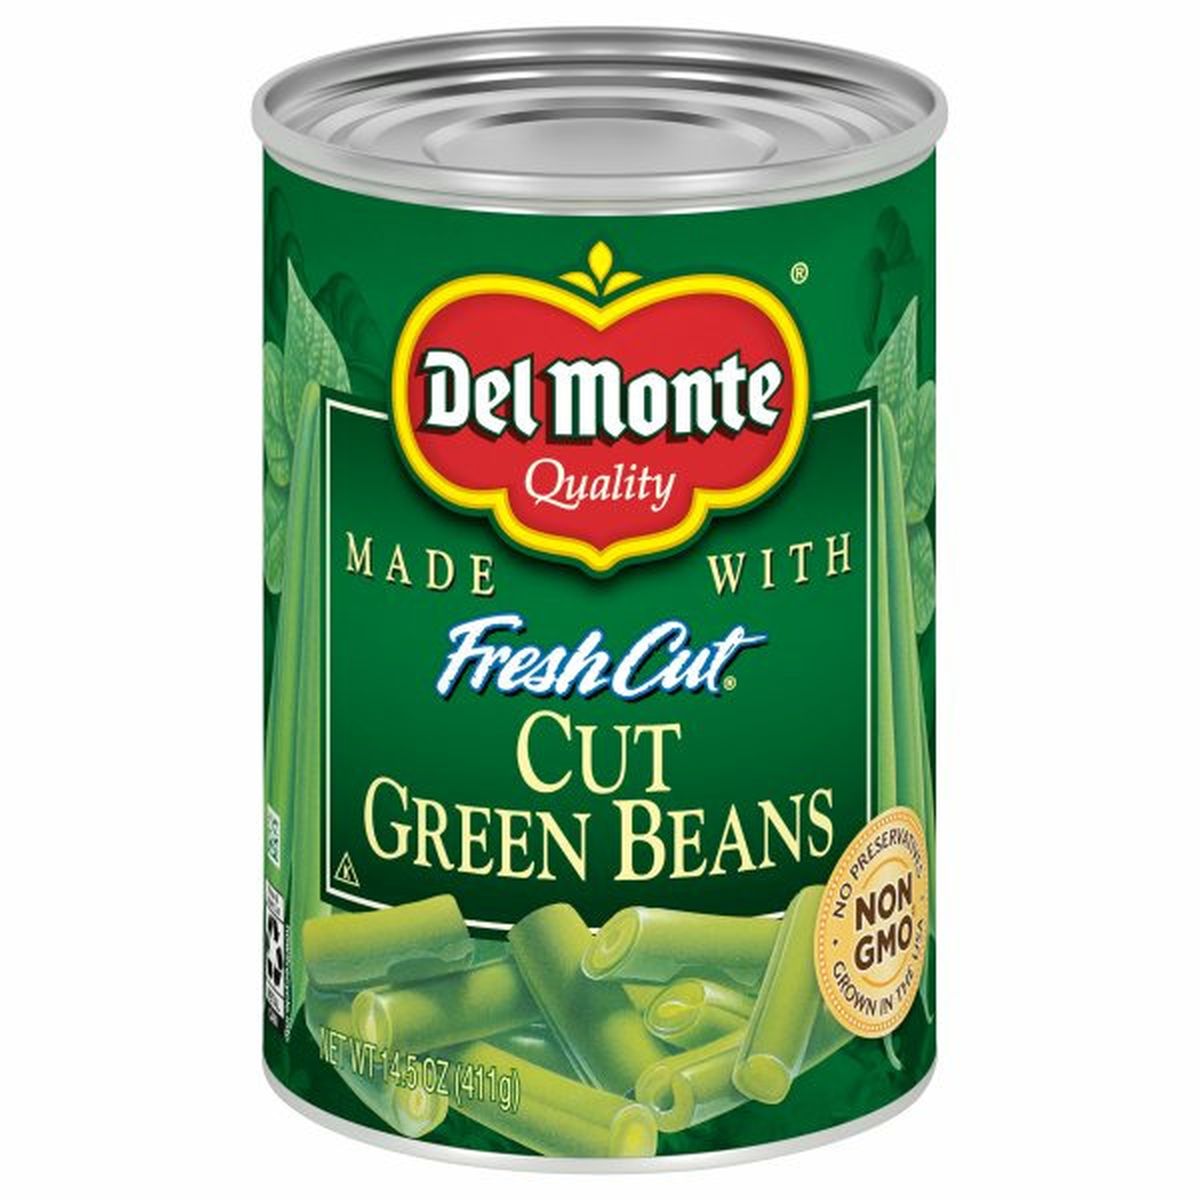 Calories in Del Monte Fresh Cut Green Beans, Cut